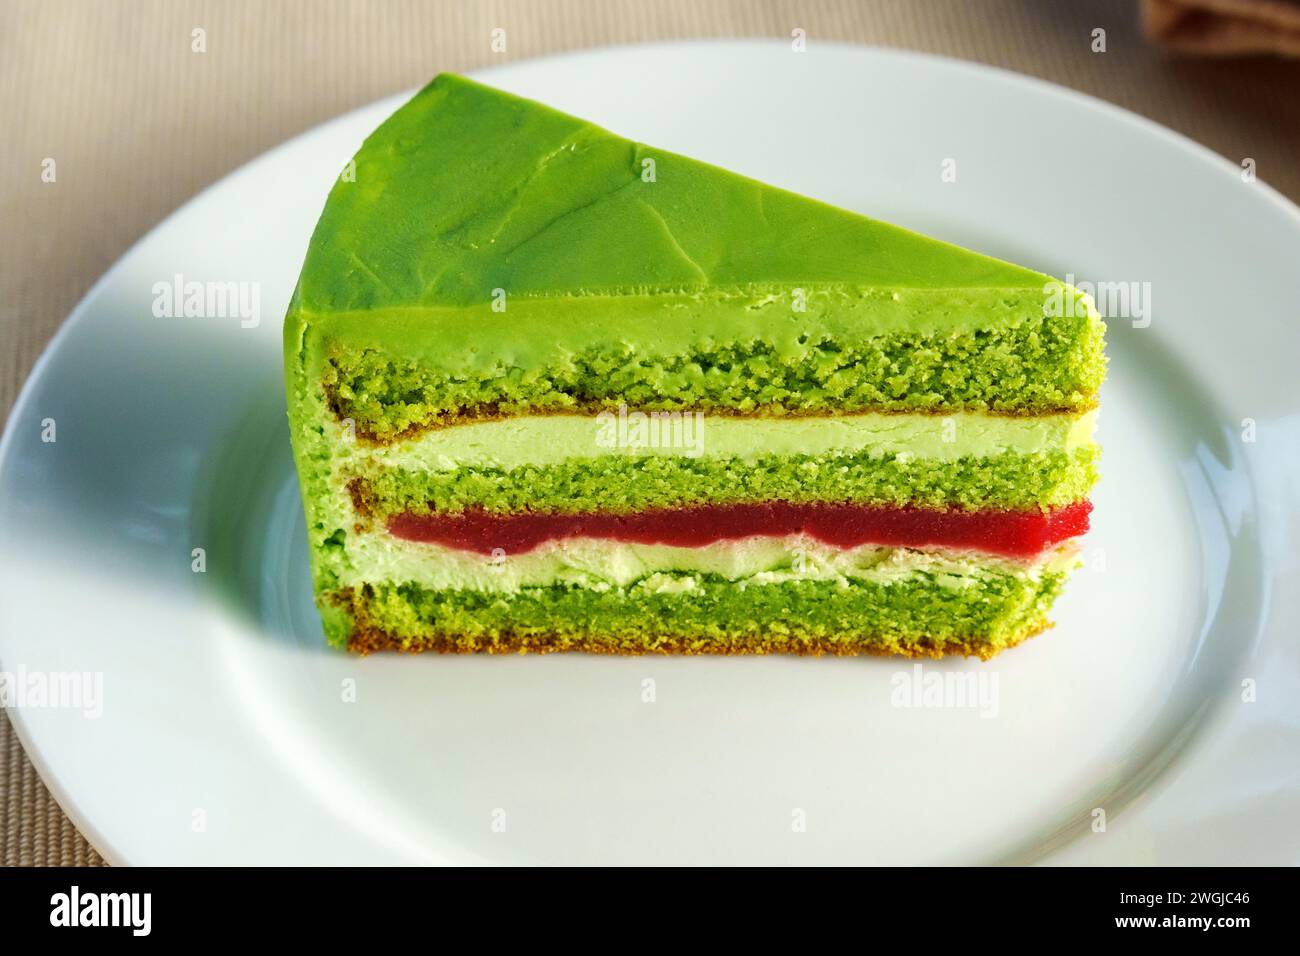 Emerald Euphoria: A Sumptuous Slice of Verdant Green Cake on Delicate White Porcelain Stock Photo